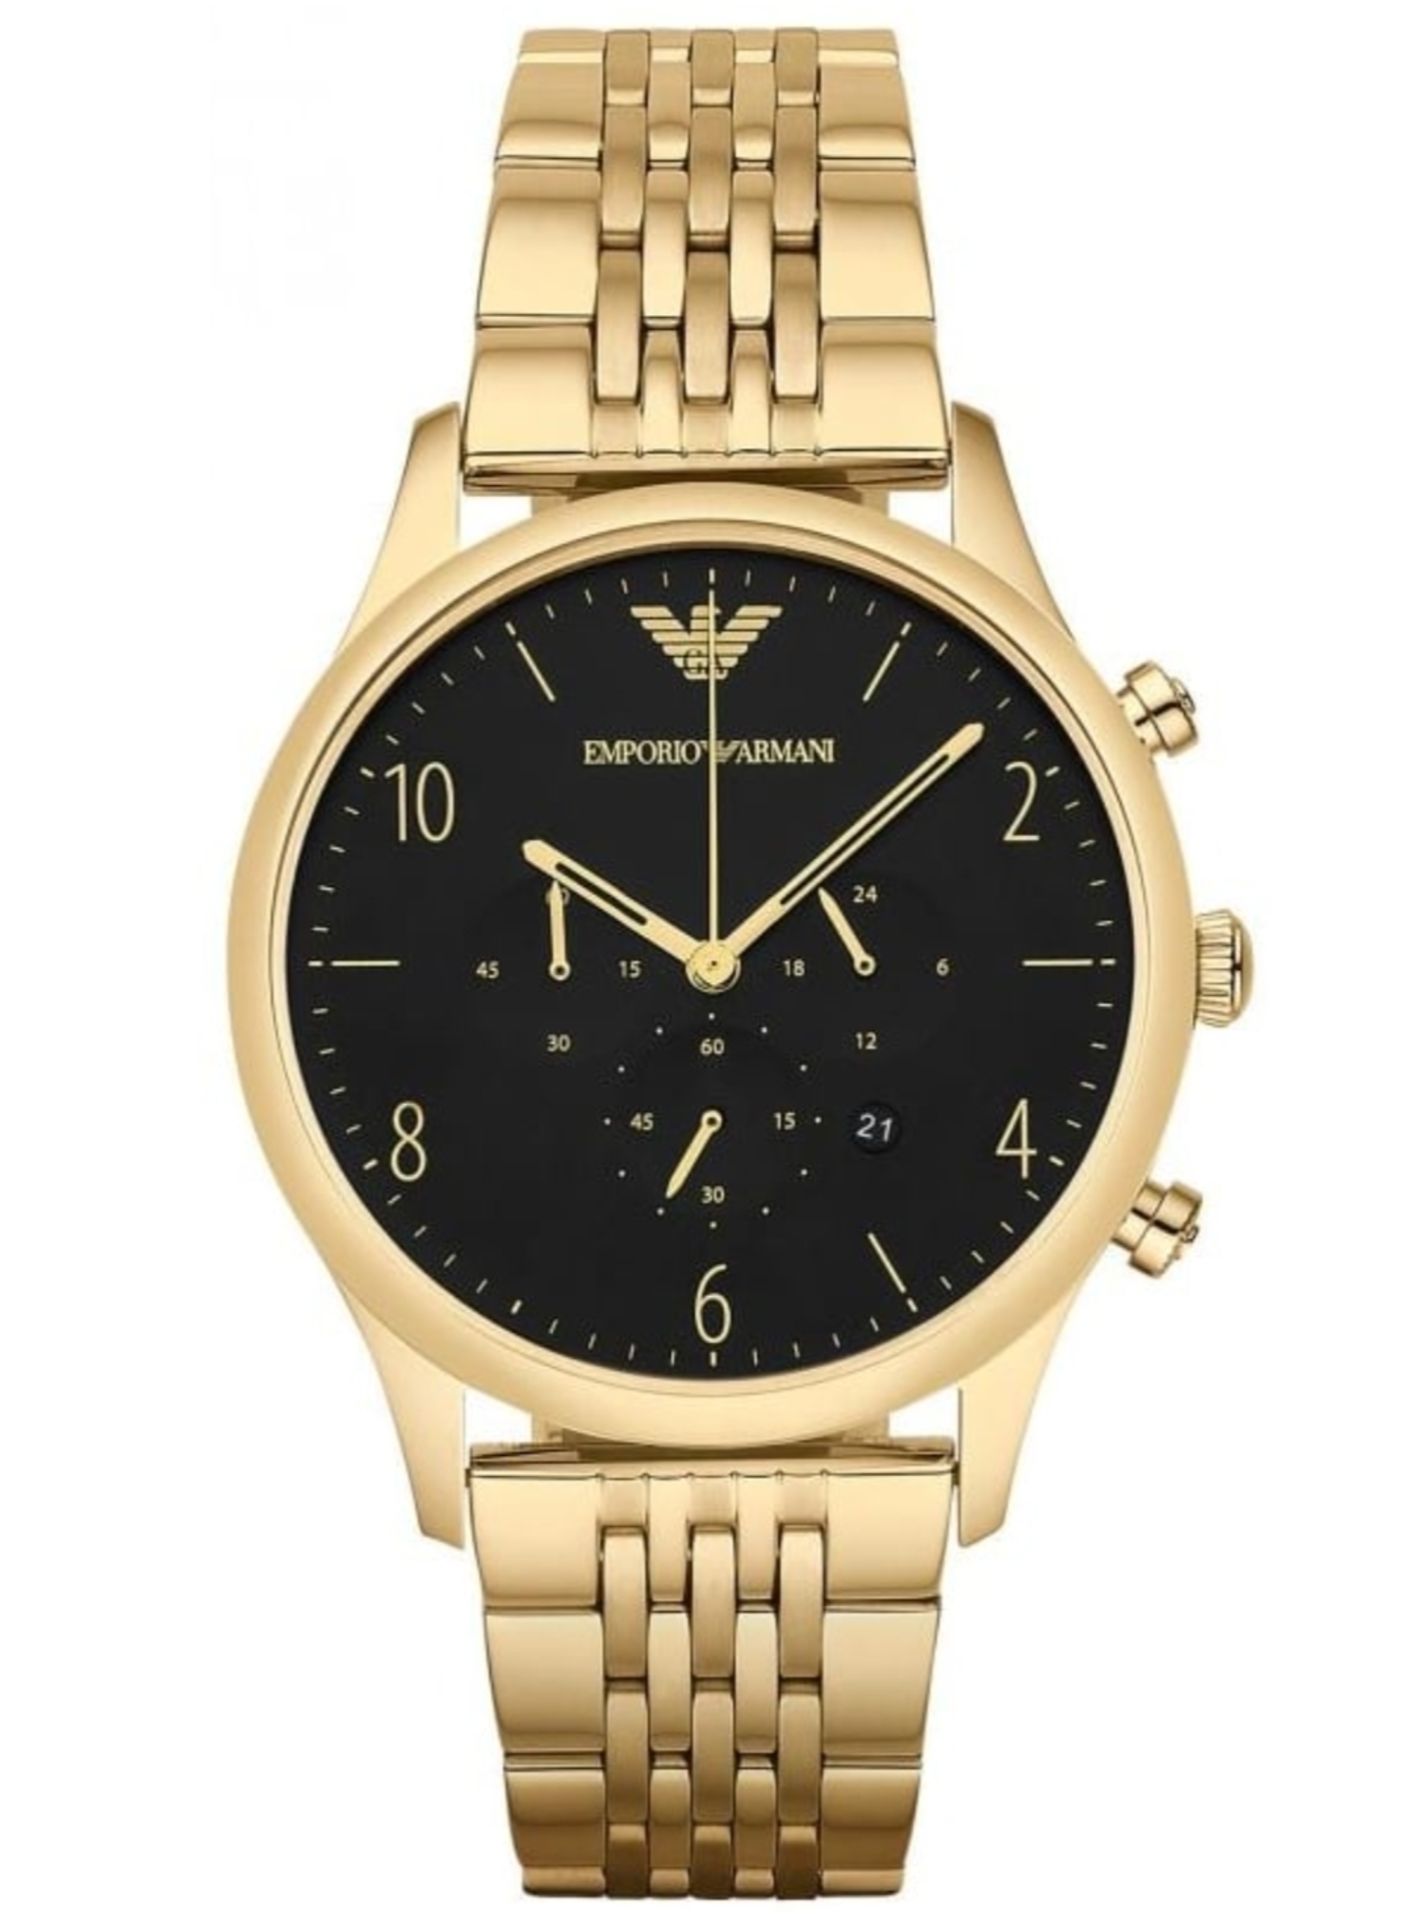 Emporio Armani AR1893 Men's Black Dial Gold Tone Bracelet Quartz Chronograph Watch